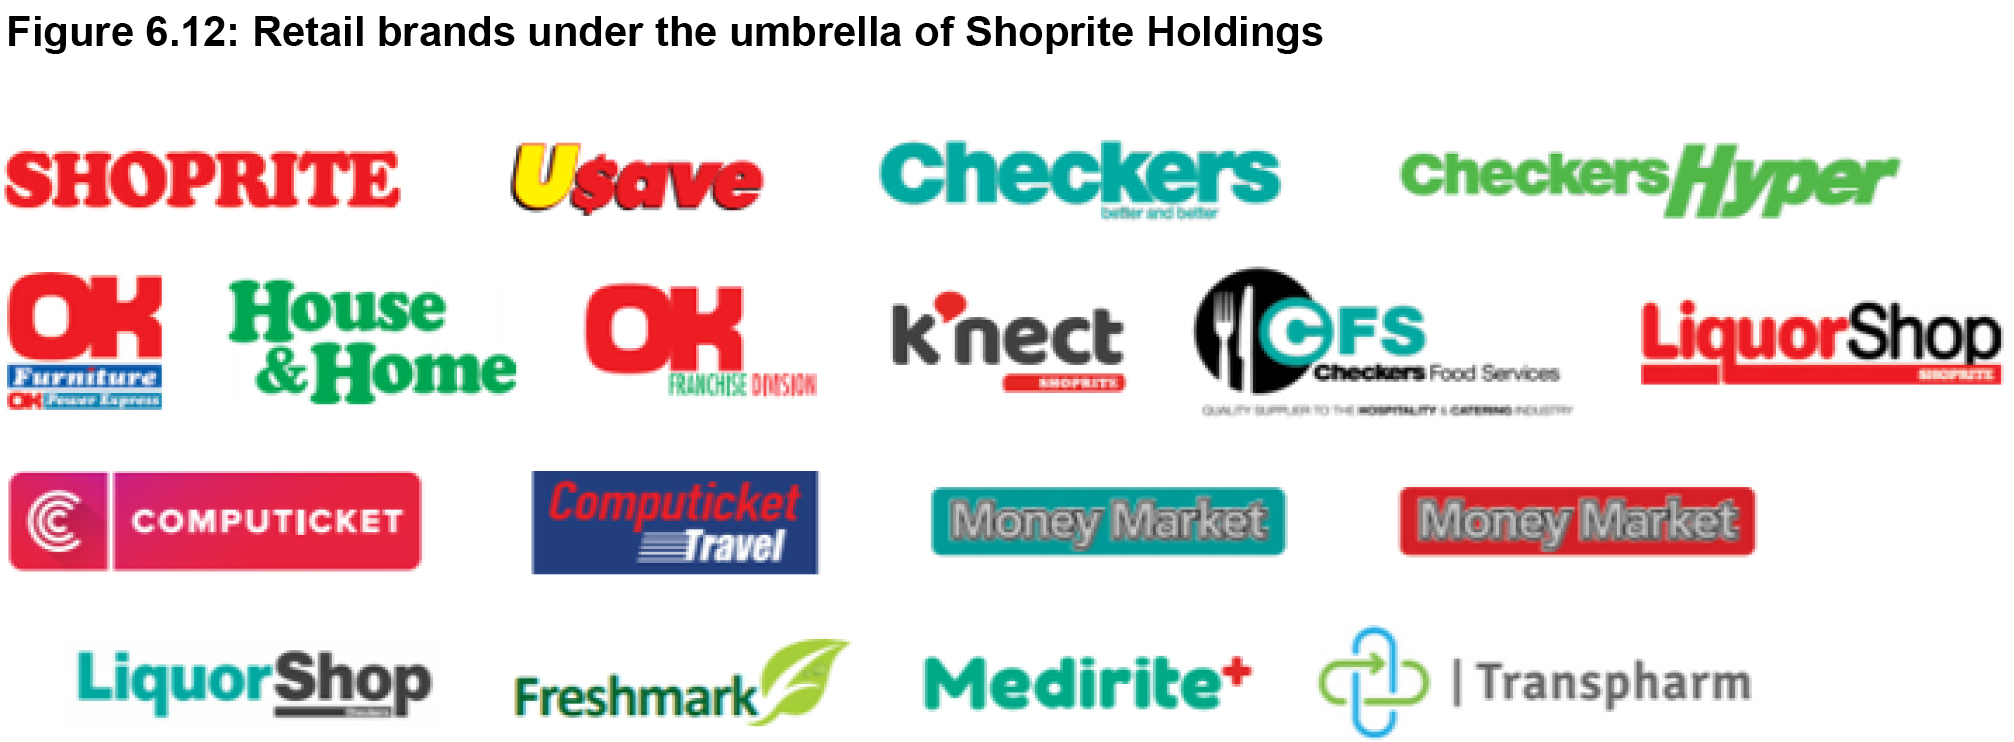 Figure 6.12: Retail brands under the umbrella of Shoprite Holdings